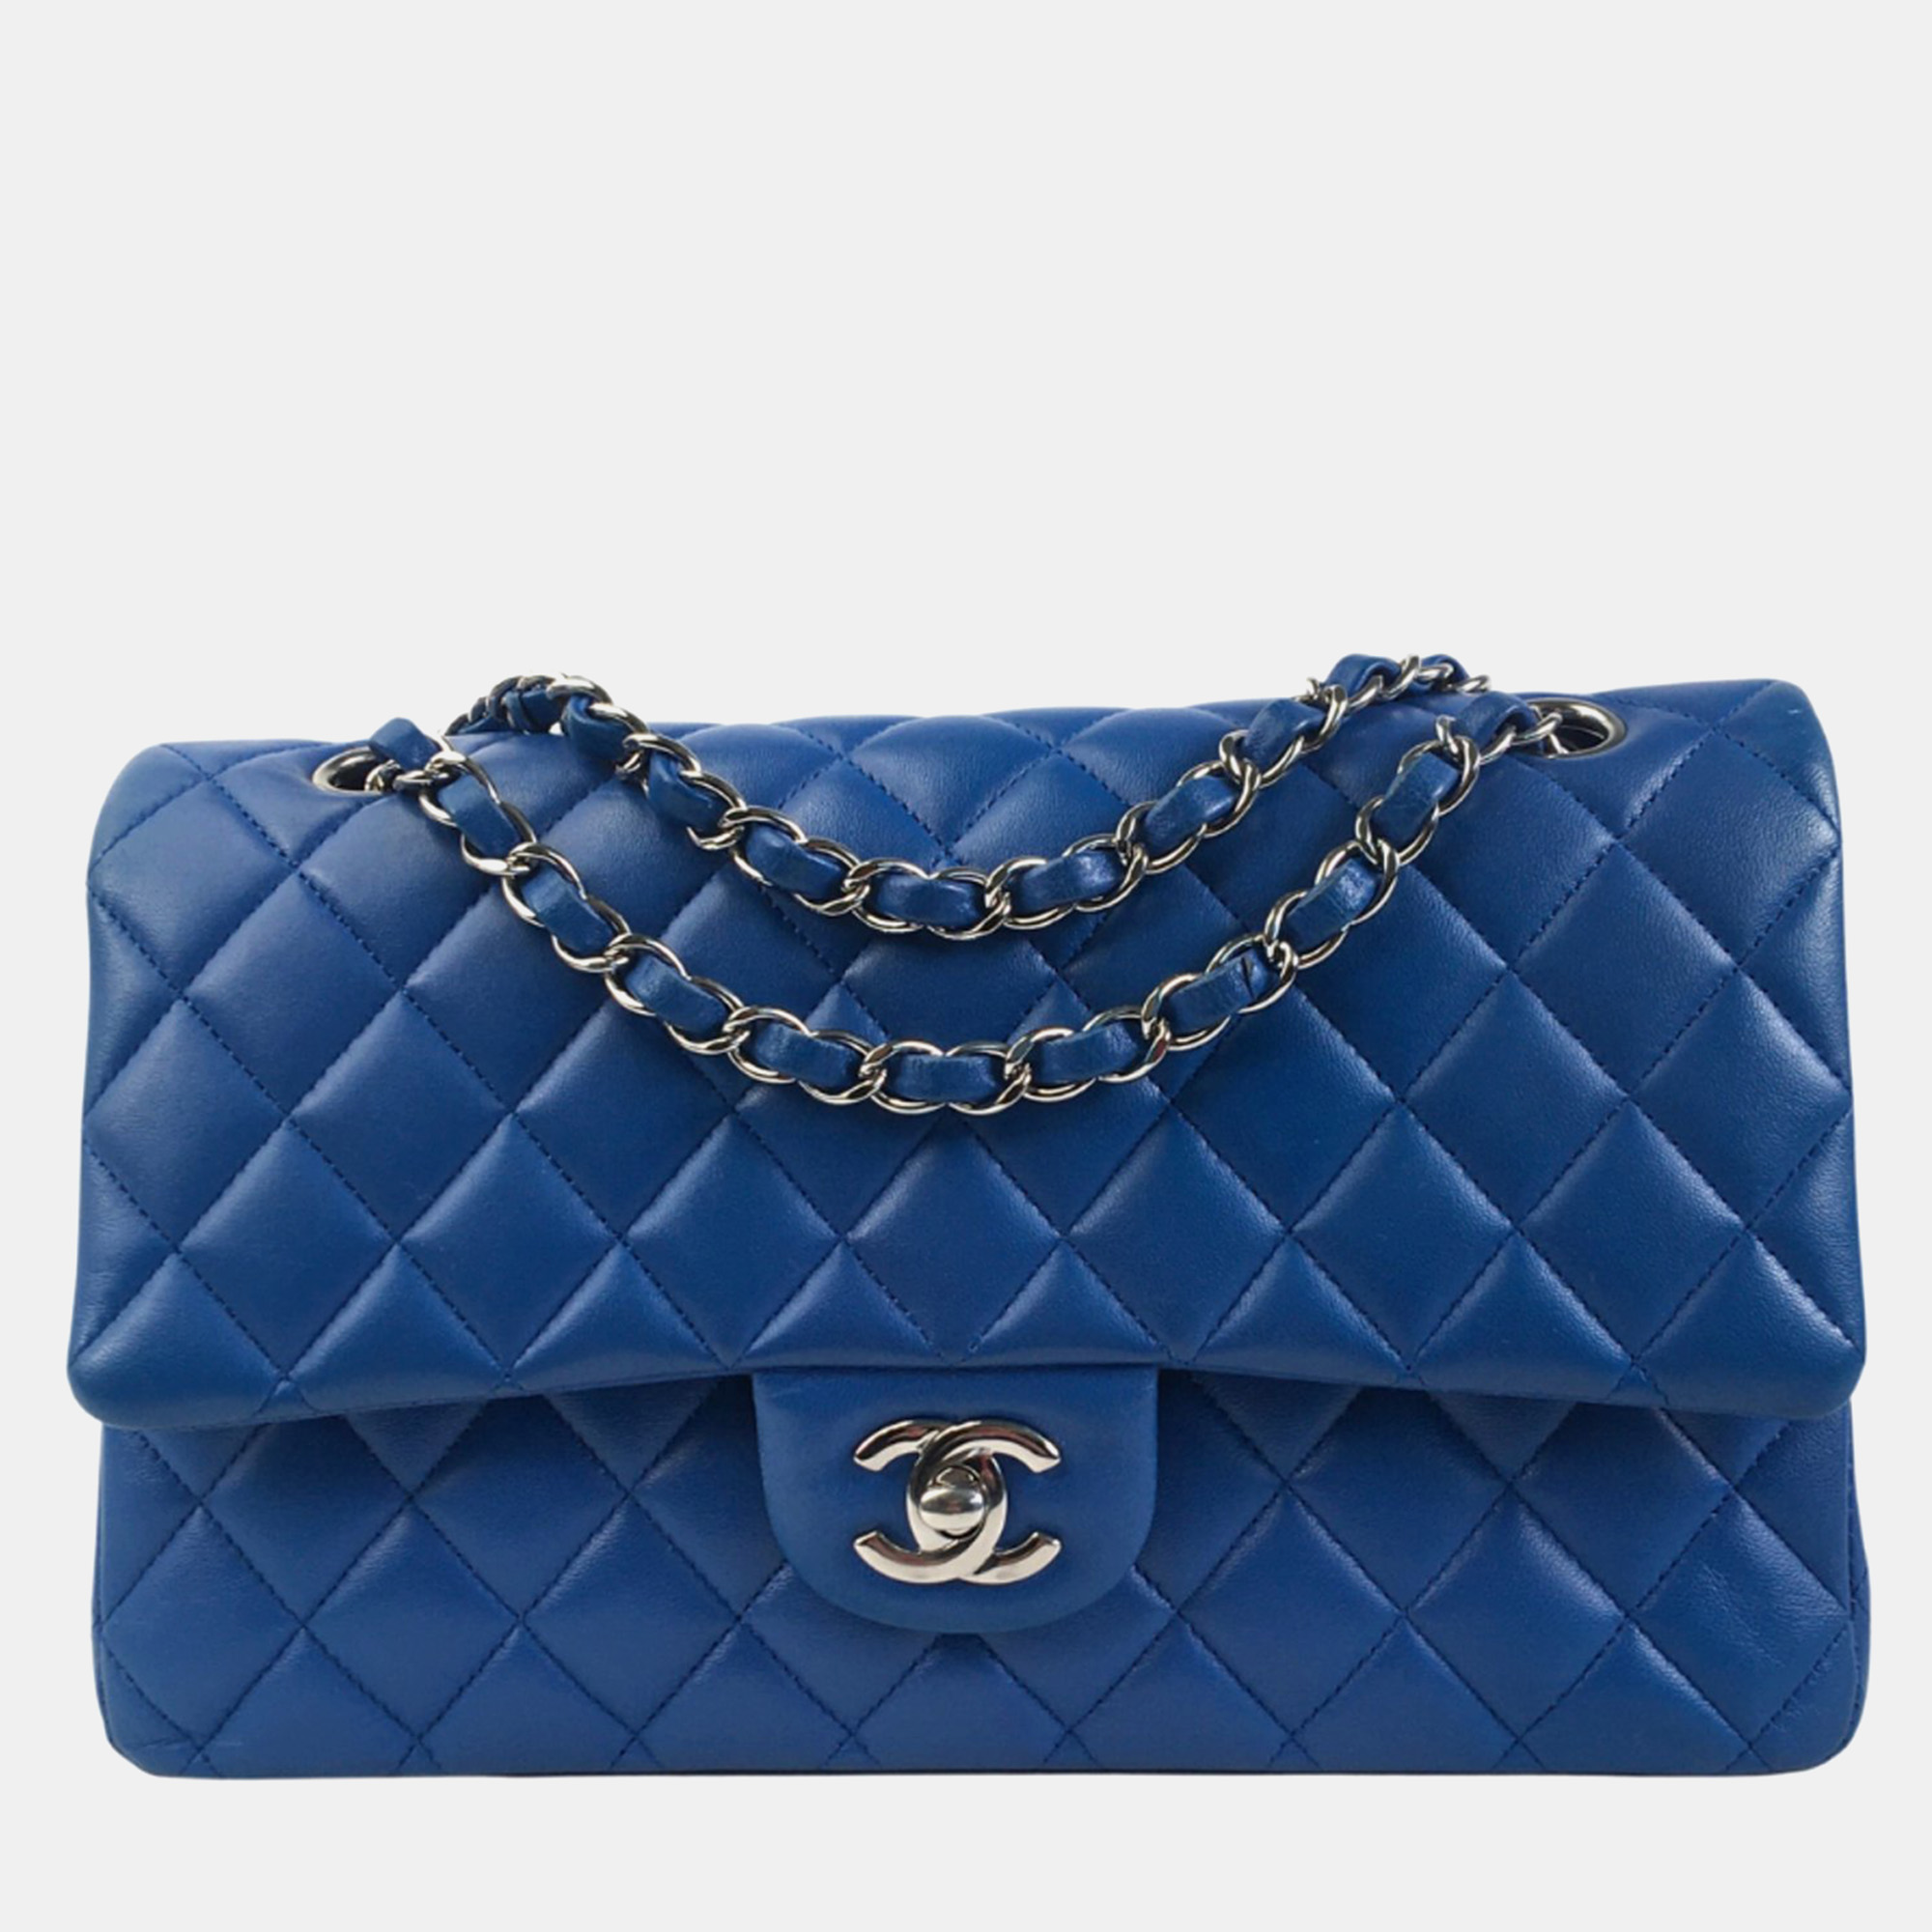 Chanel blue lambskin leather medium classic double flap shoulder bags